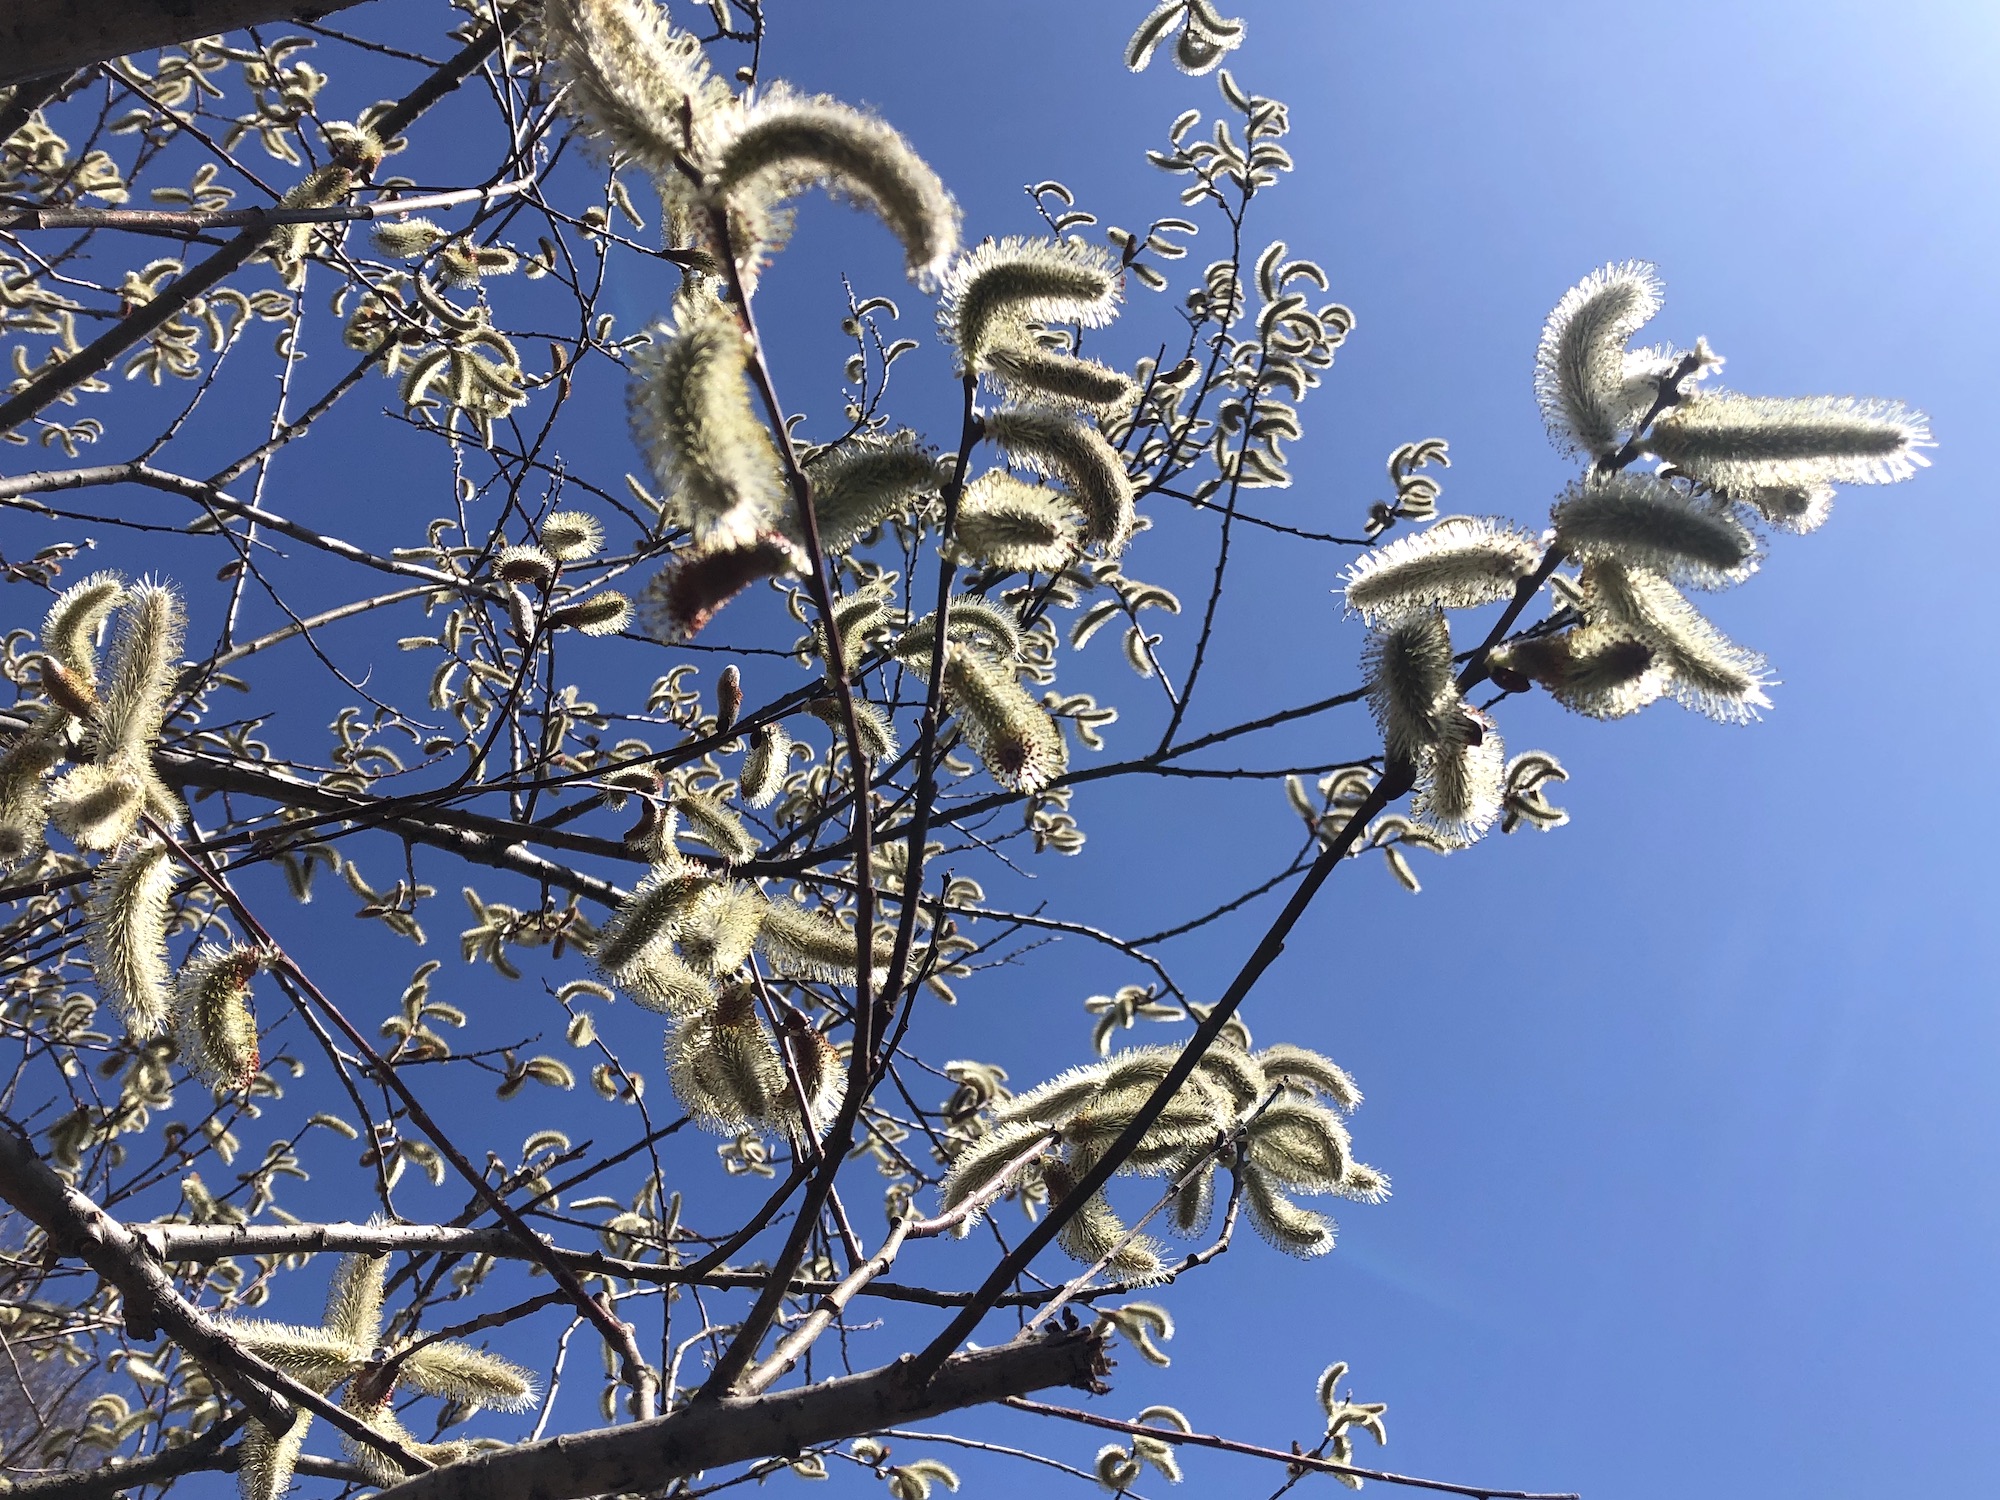 Giant Pussy Willows in UW-Madison Arboretum on April 1, 2021.